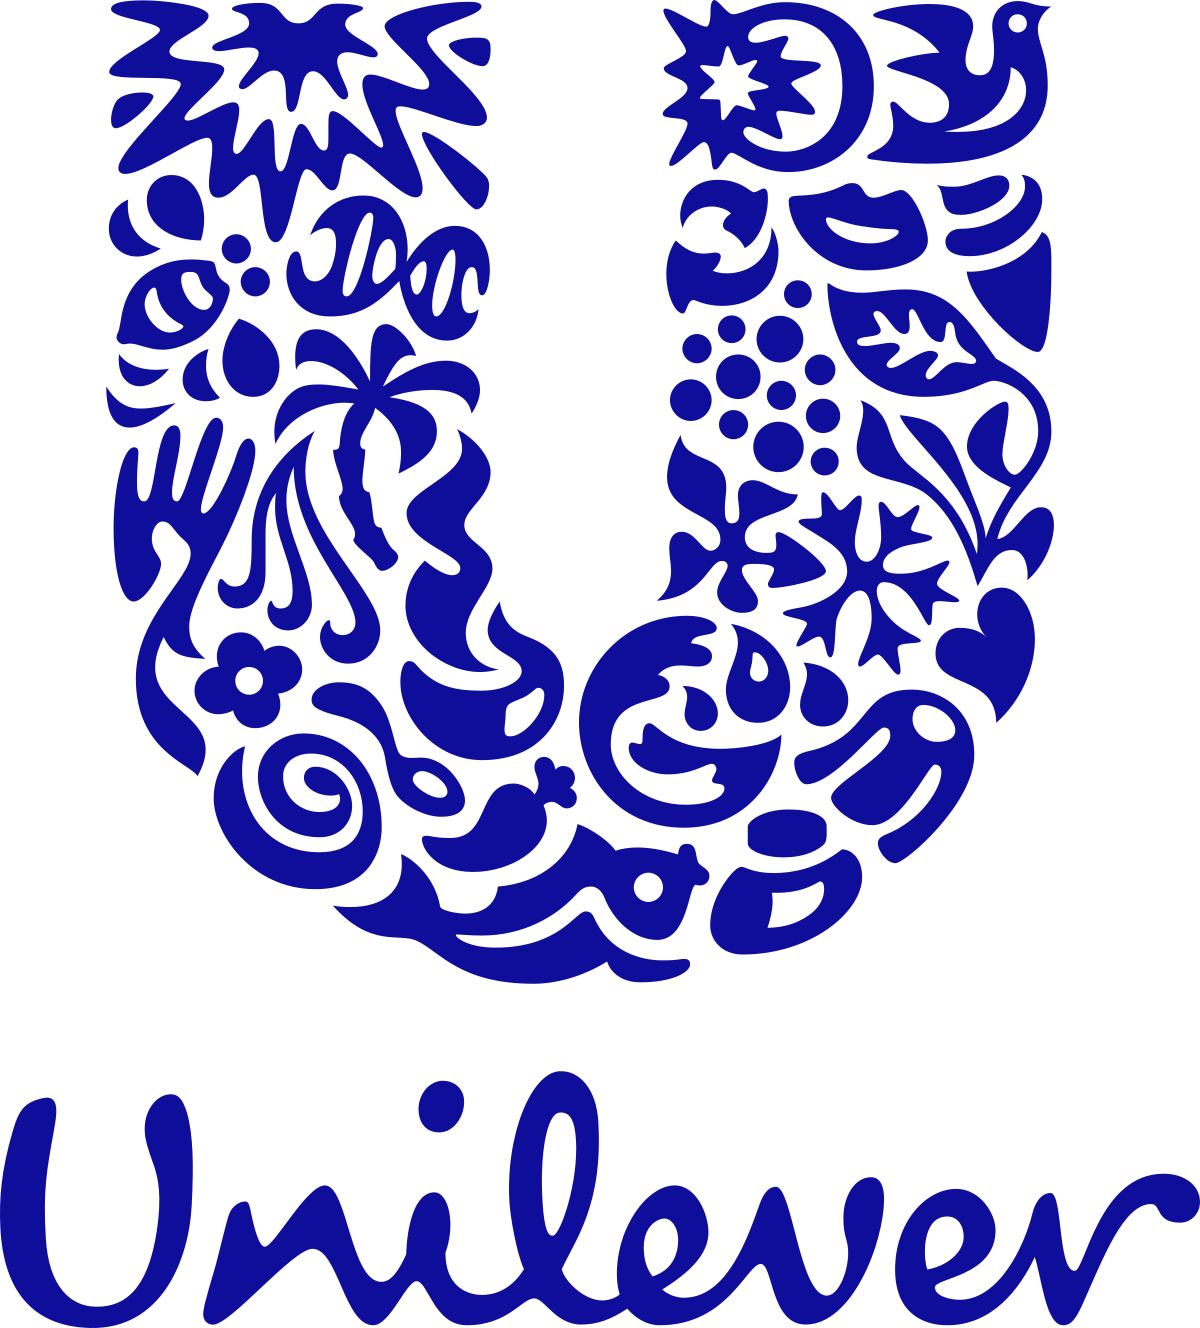 Unilever Shampoo Logo - Unilever